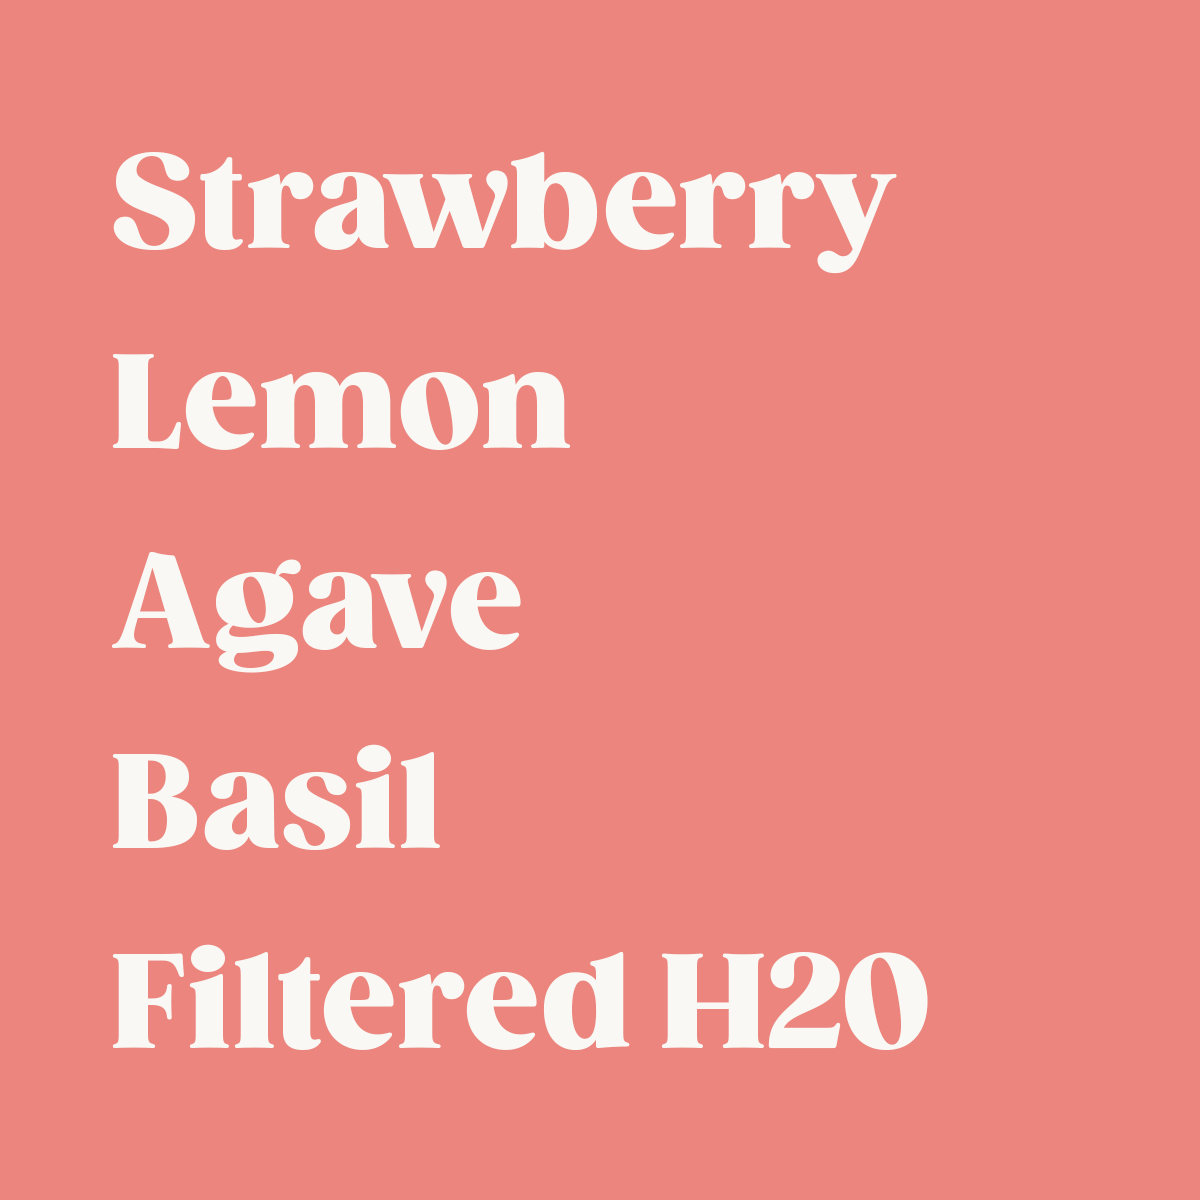 PUR juice cleanse cold pressed juice STRAWBERRY BASIL LEMONADE Strawberry Basil Lemonade Juice | Cold-Pressed Juice | PUR Lemonade